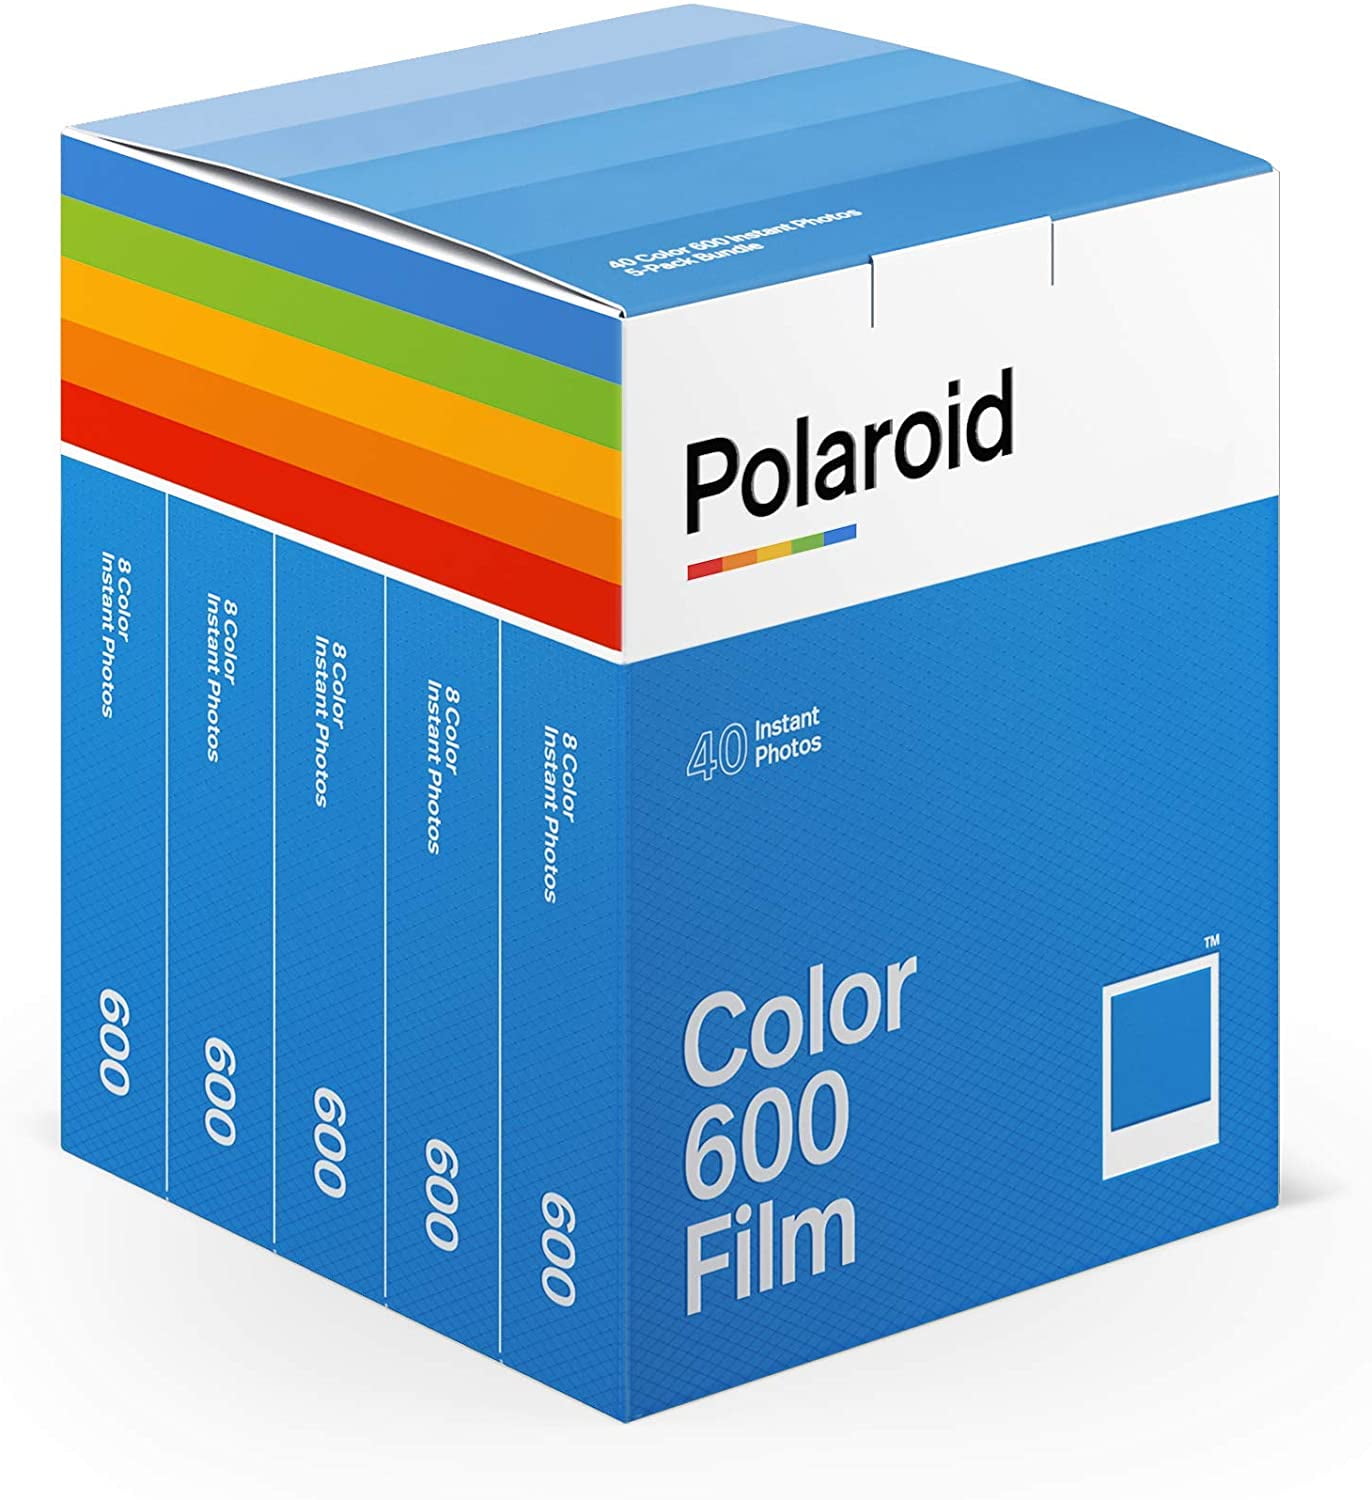 Opgetild Promoten monster Polaroid Color 600 Film 5 Pack (40 Photos) (6013) - Walmart.com